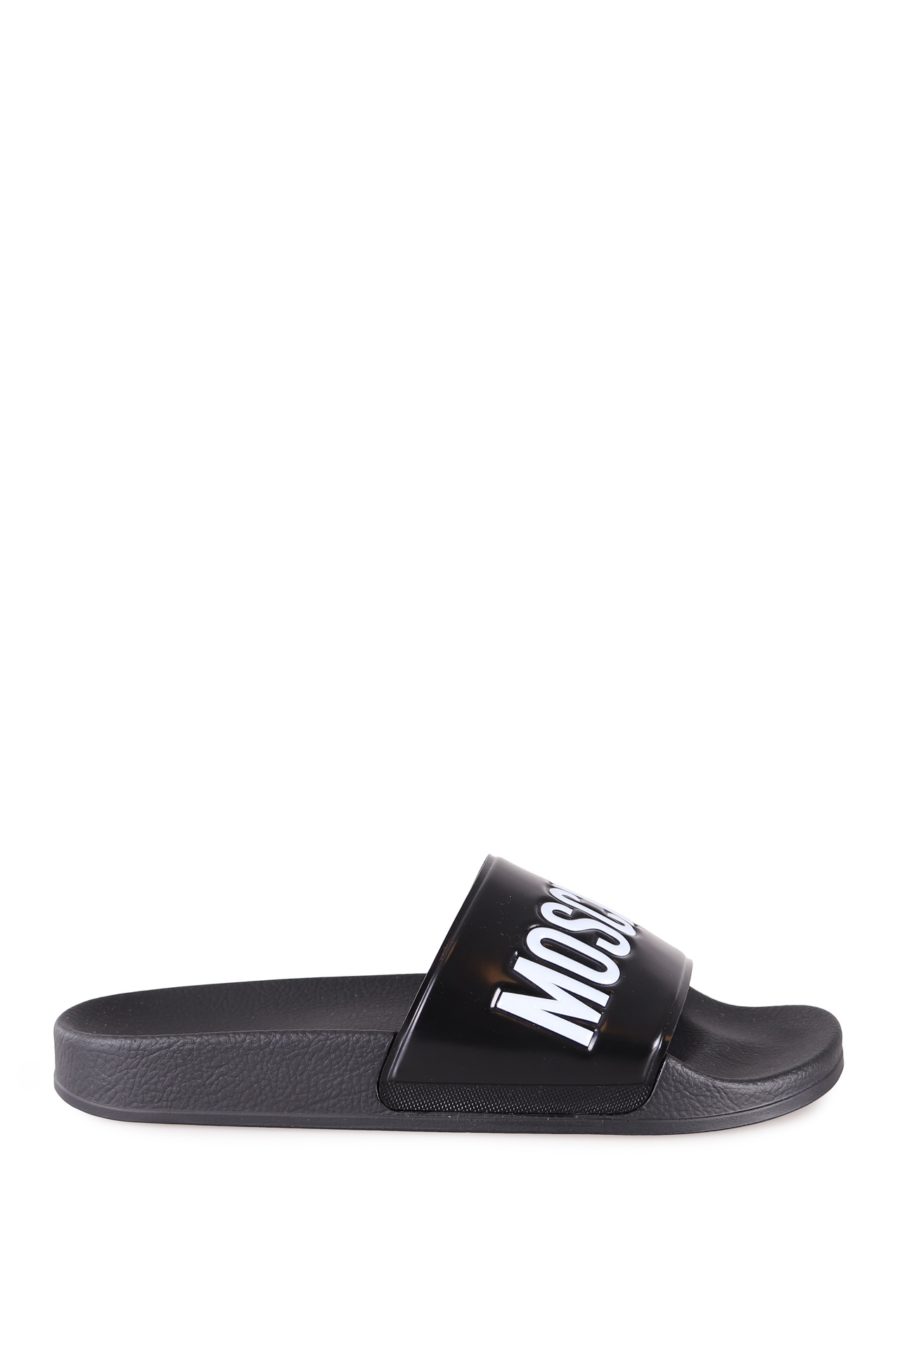 Moschino Couture schwarze Flip Flops mit weißem Logo - 3ccdea24b2ac65b1842ab8513e5ae38218a64a47